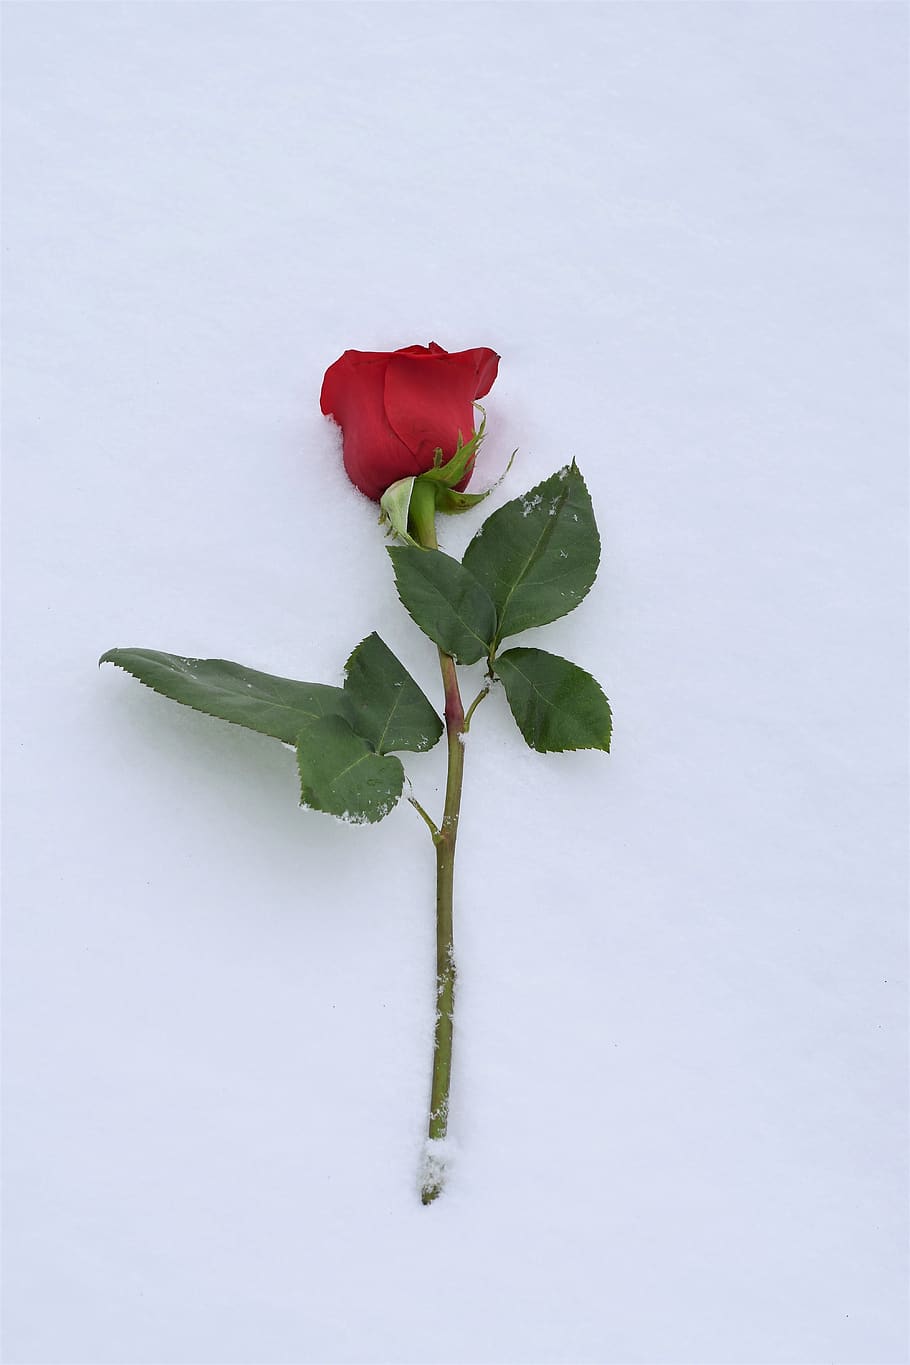 red rose in snow, love symbol, true love never dies, winter, HD wallpaper